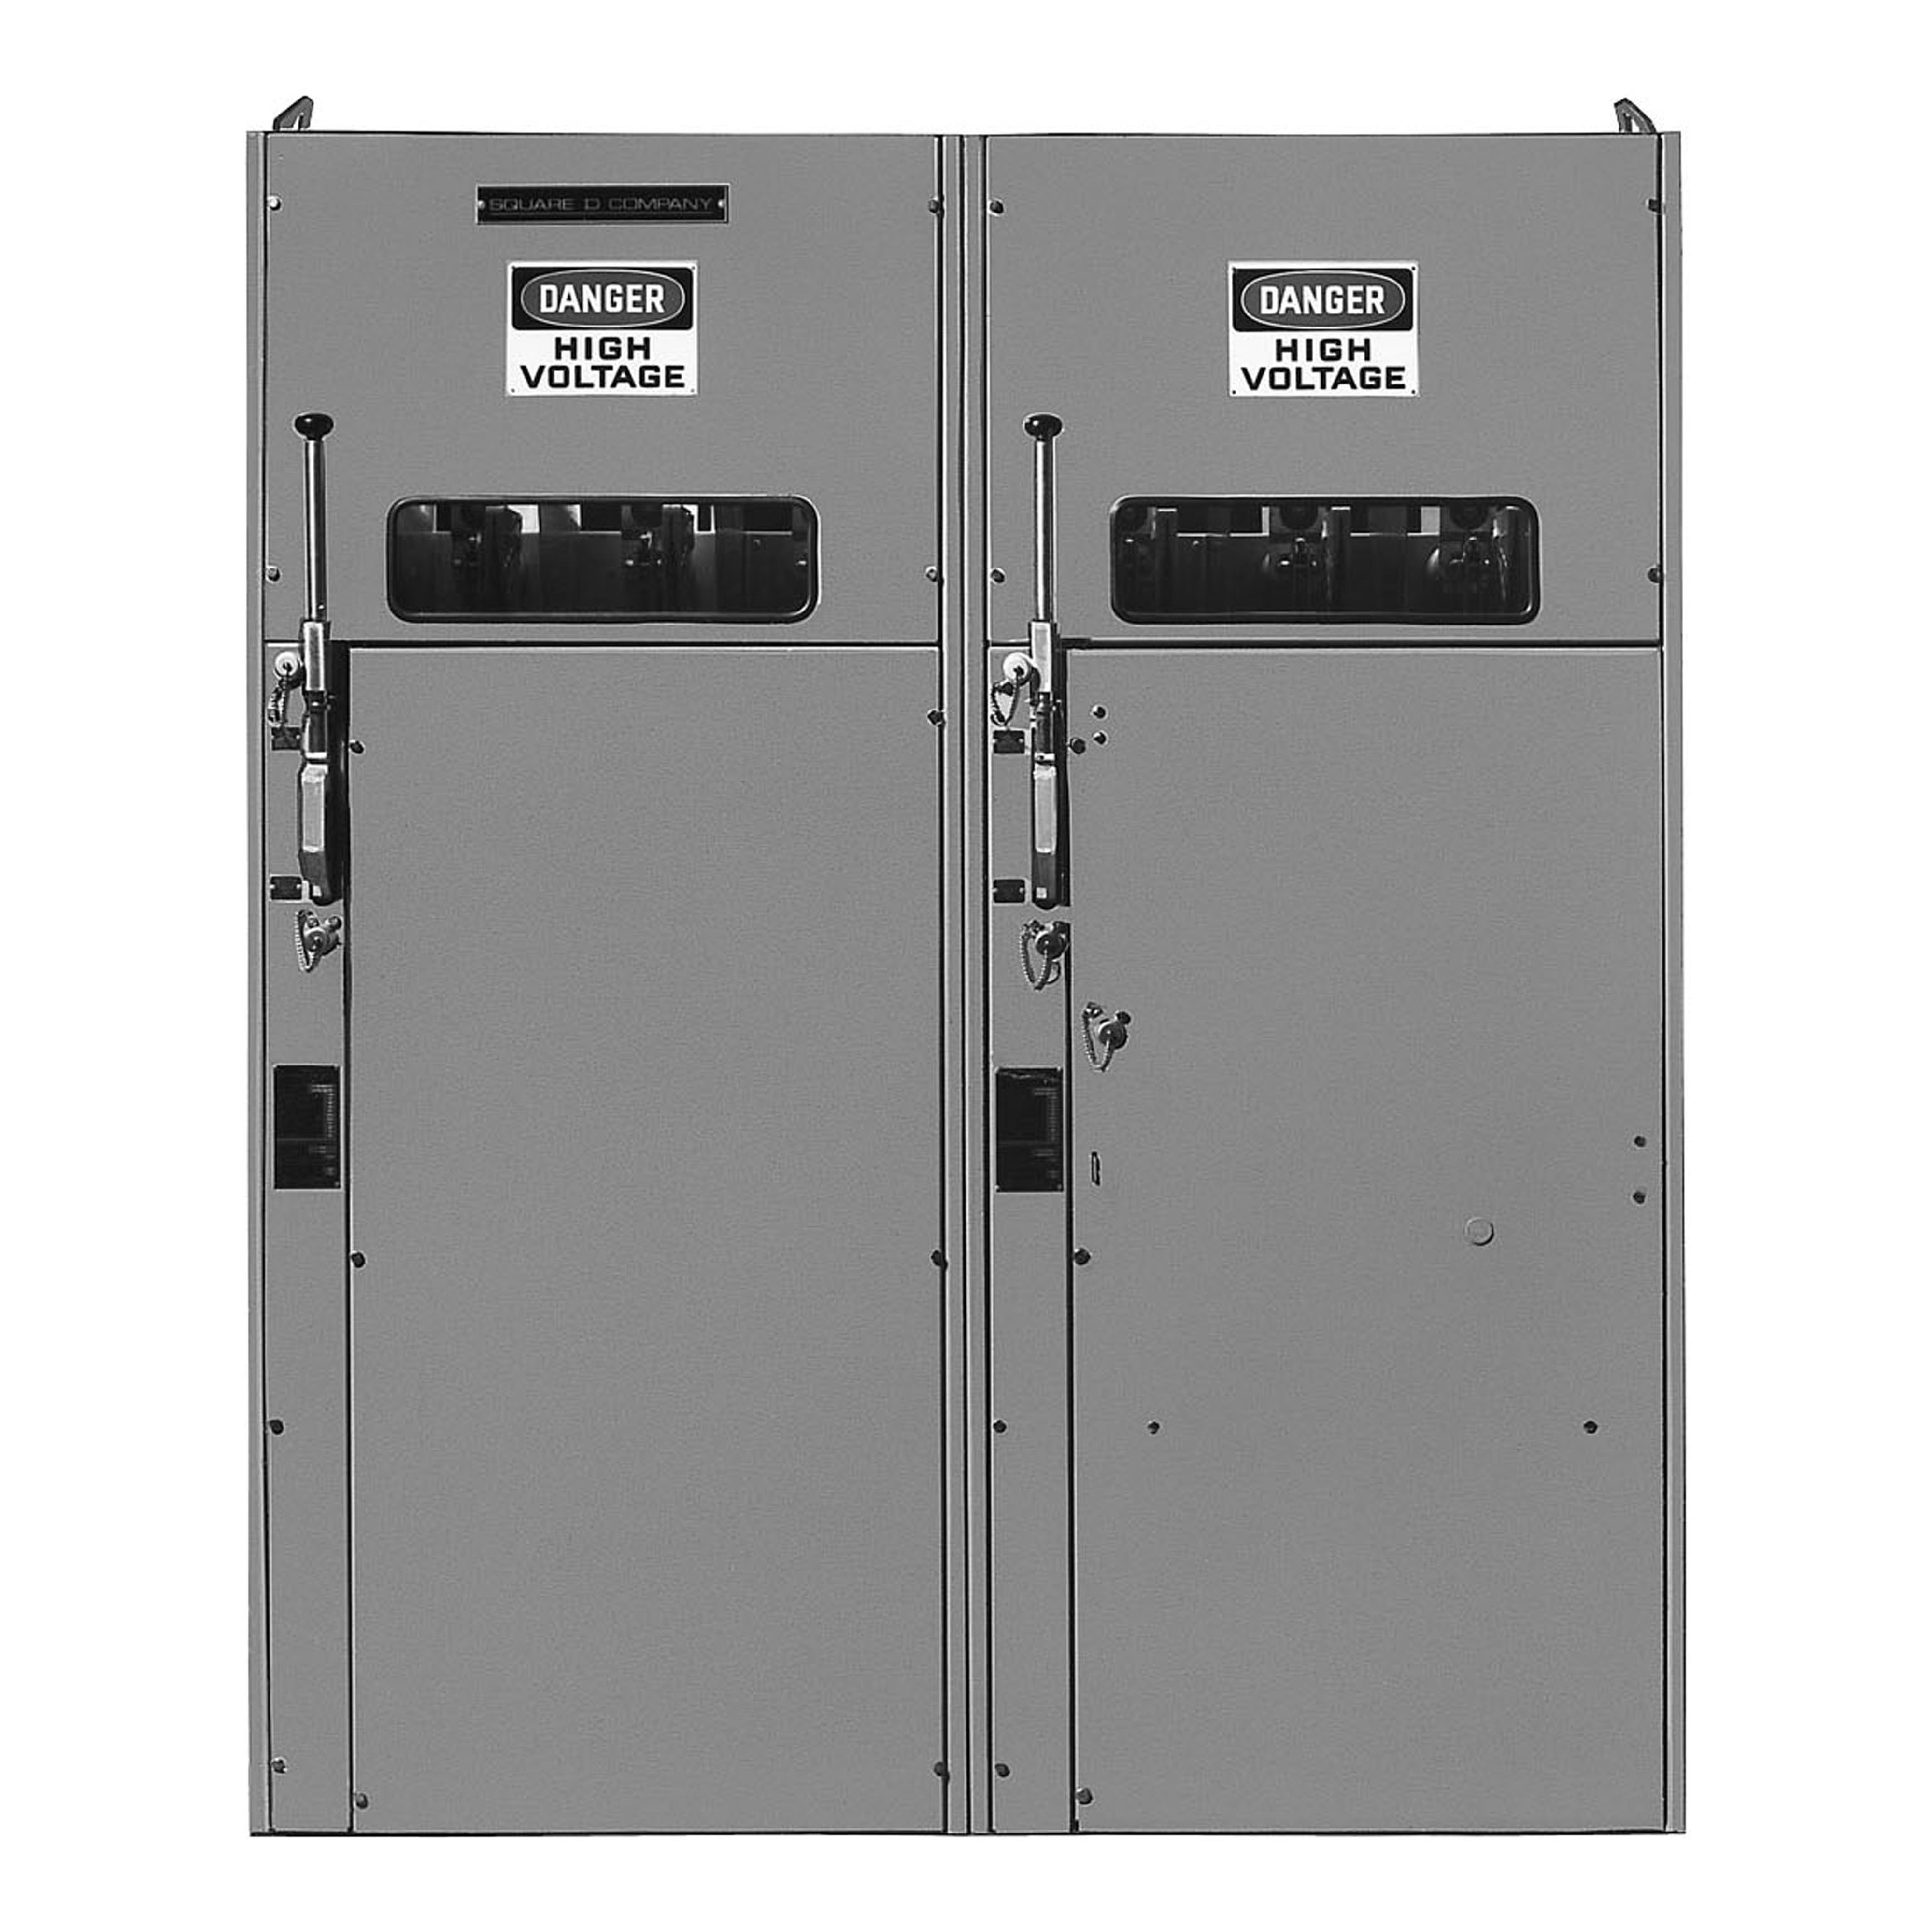 Switchgear, HVL, duplex, 600A, 15kV, 125 to 200E current limit fuse, transformer disconnect, right, NEMA 1